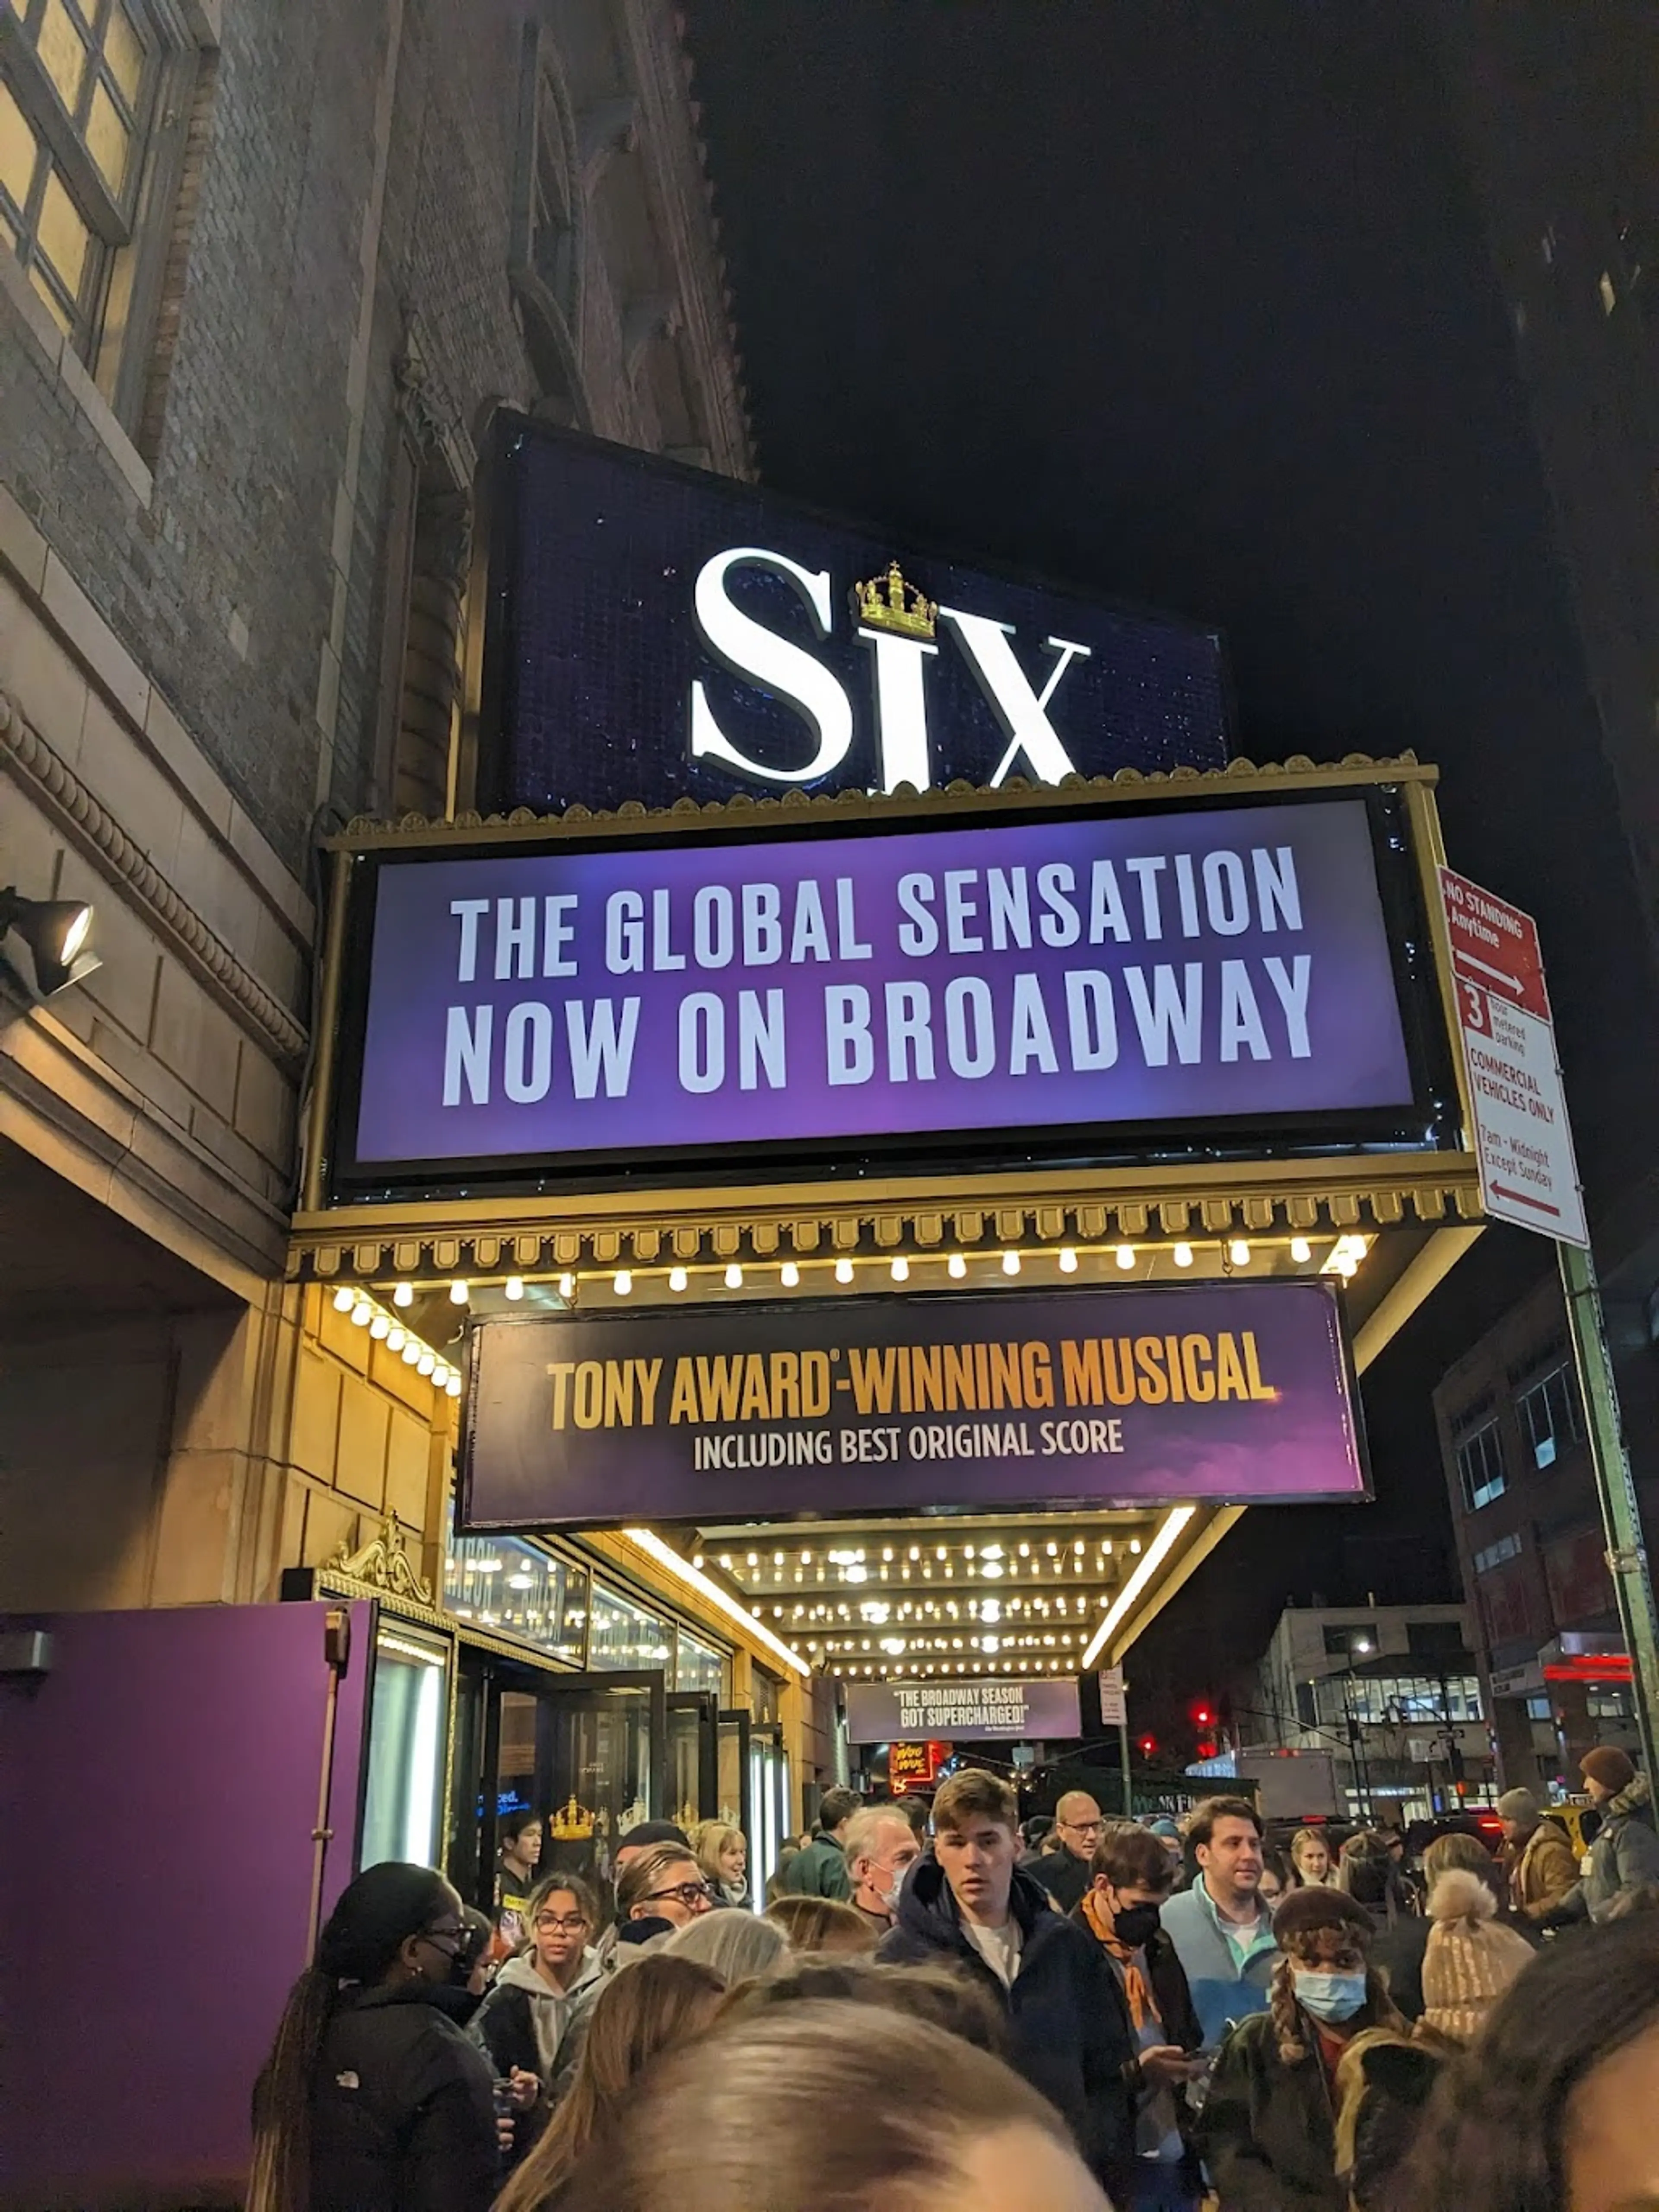 Broadway show